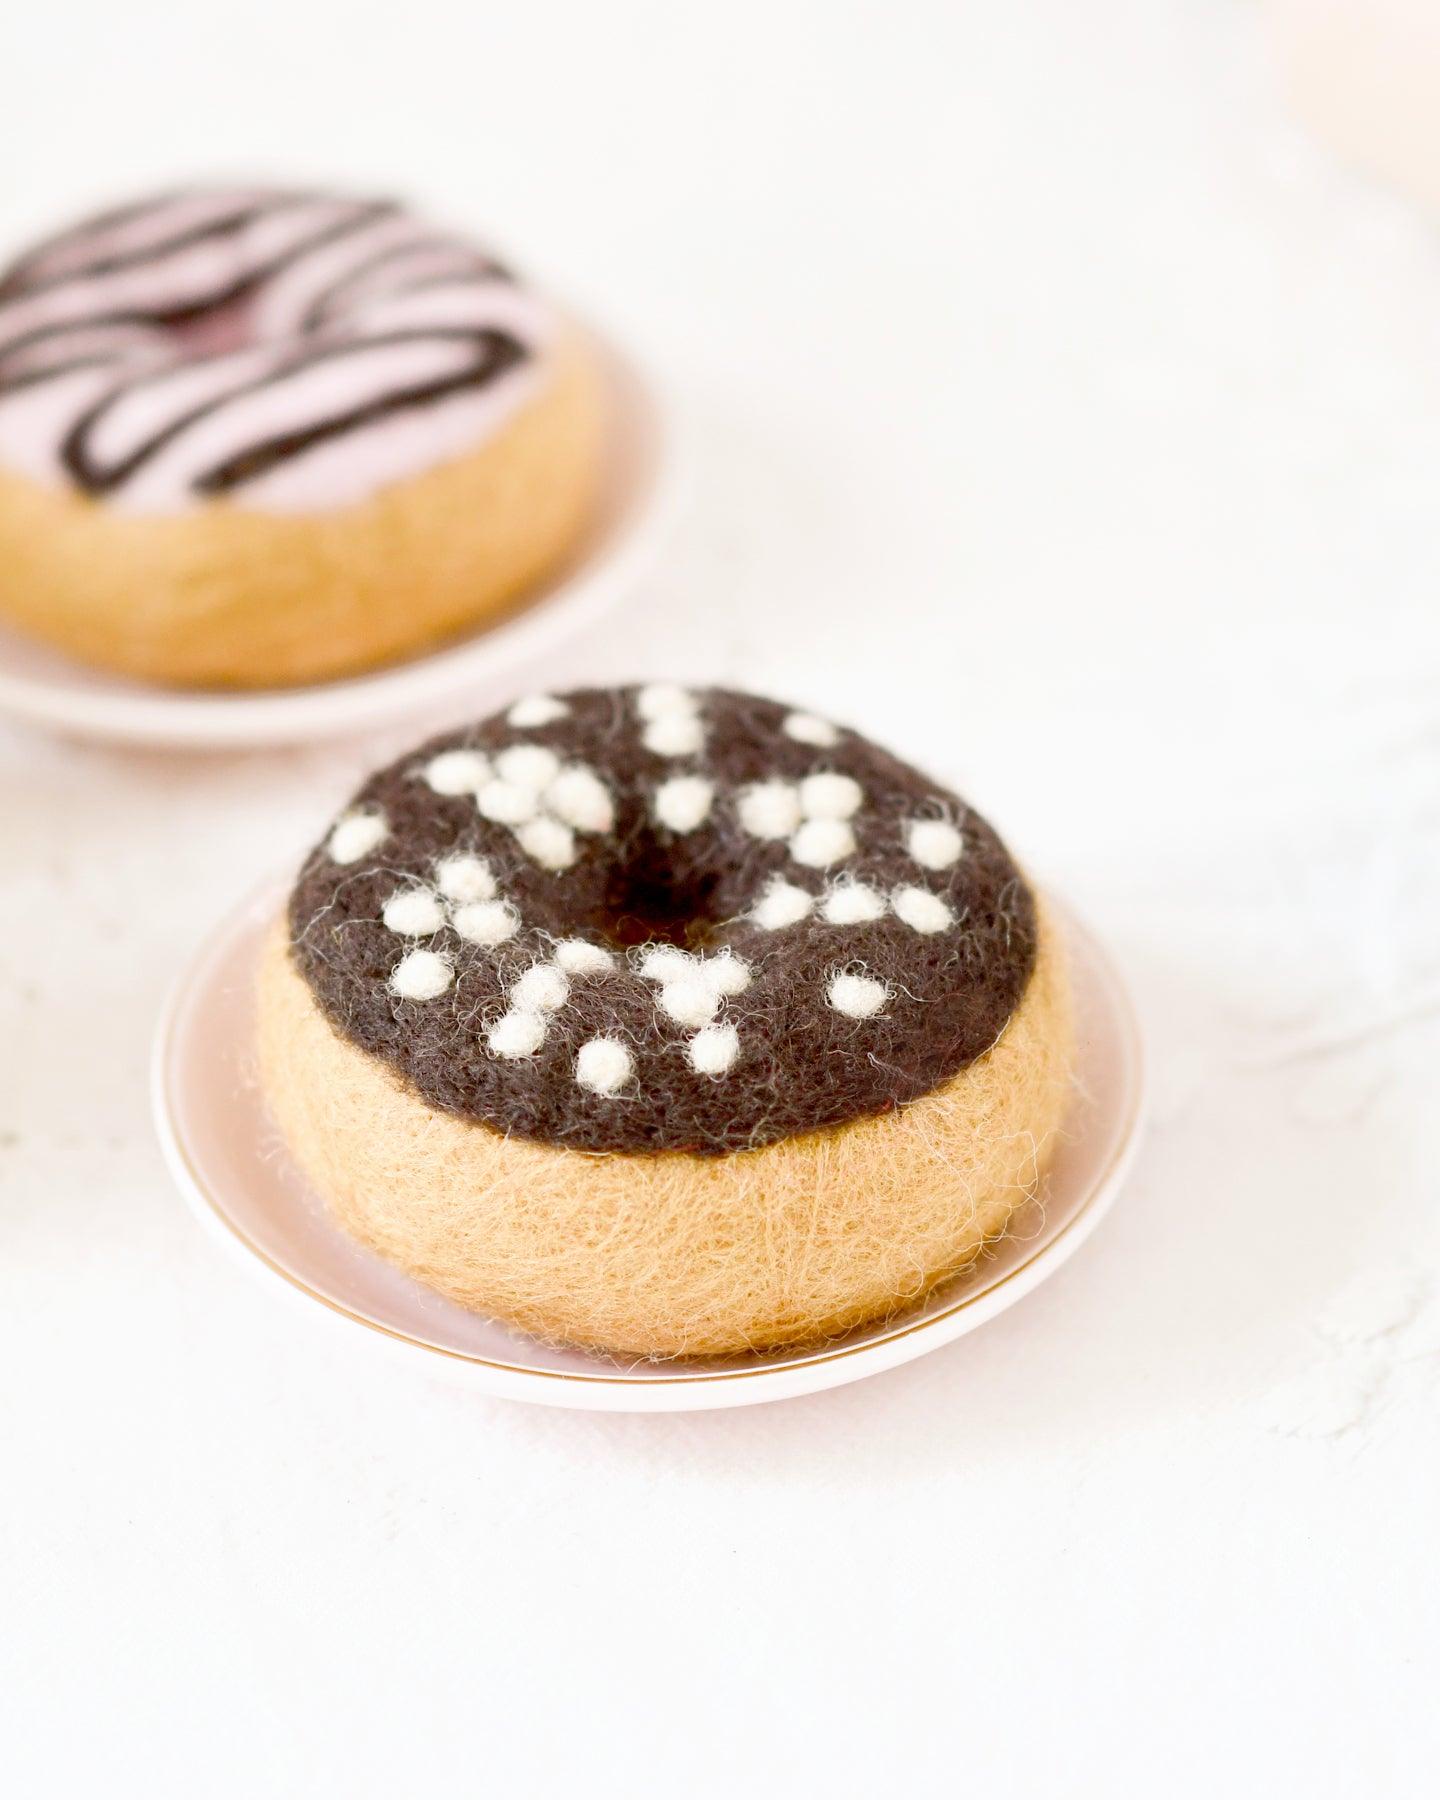 Felt Doughnut (Donut) with Chocolate Frosting and Nuts - Tara Treasures